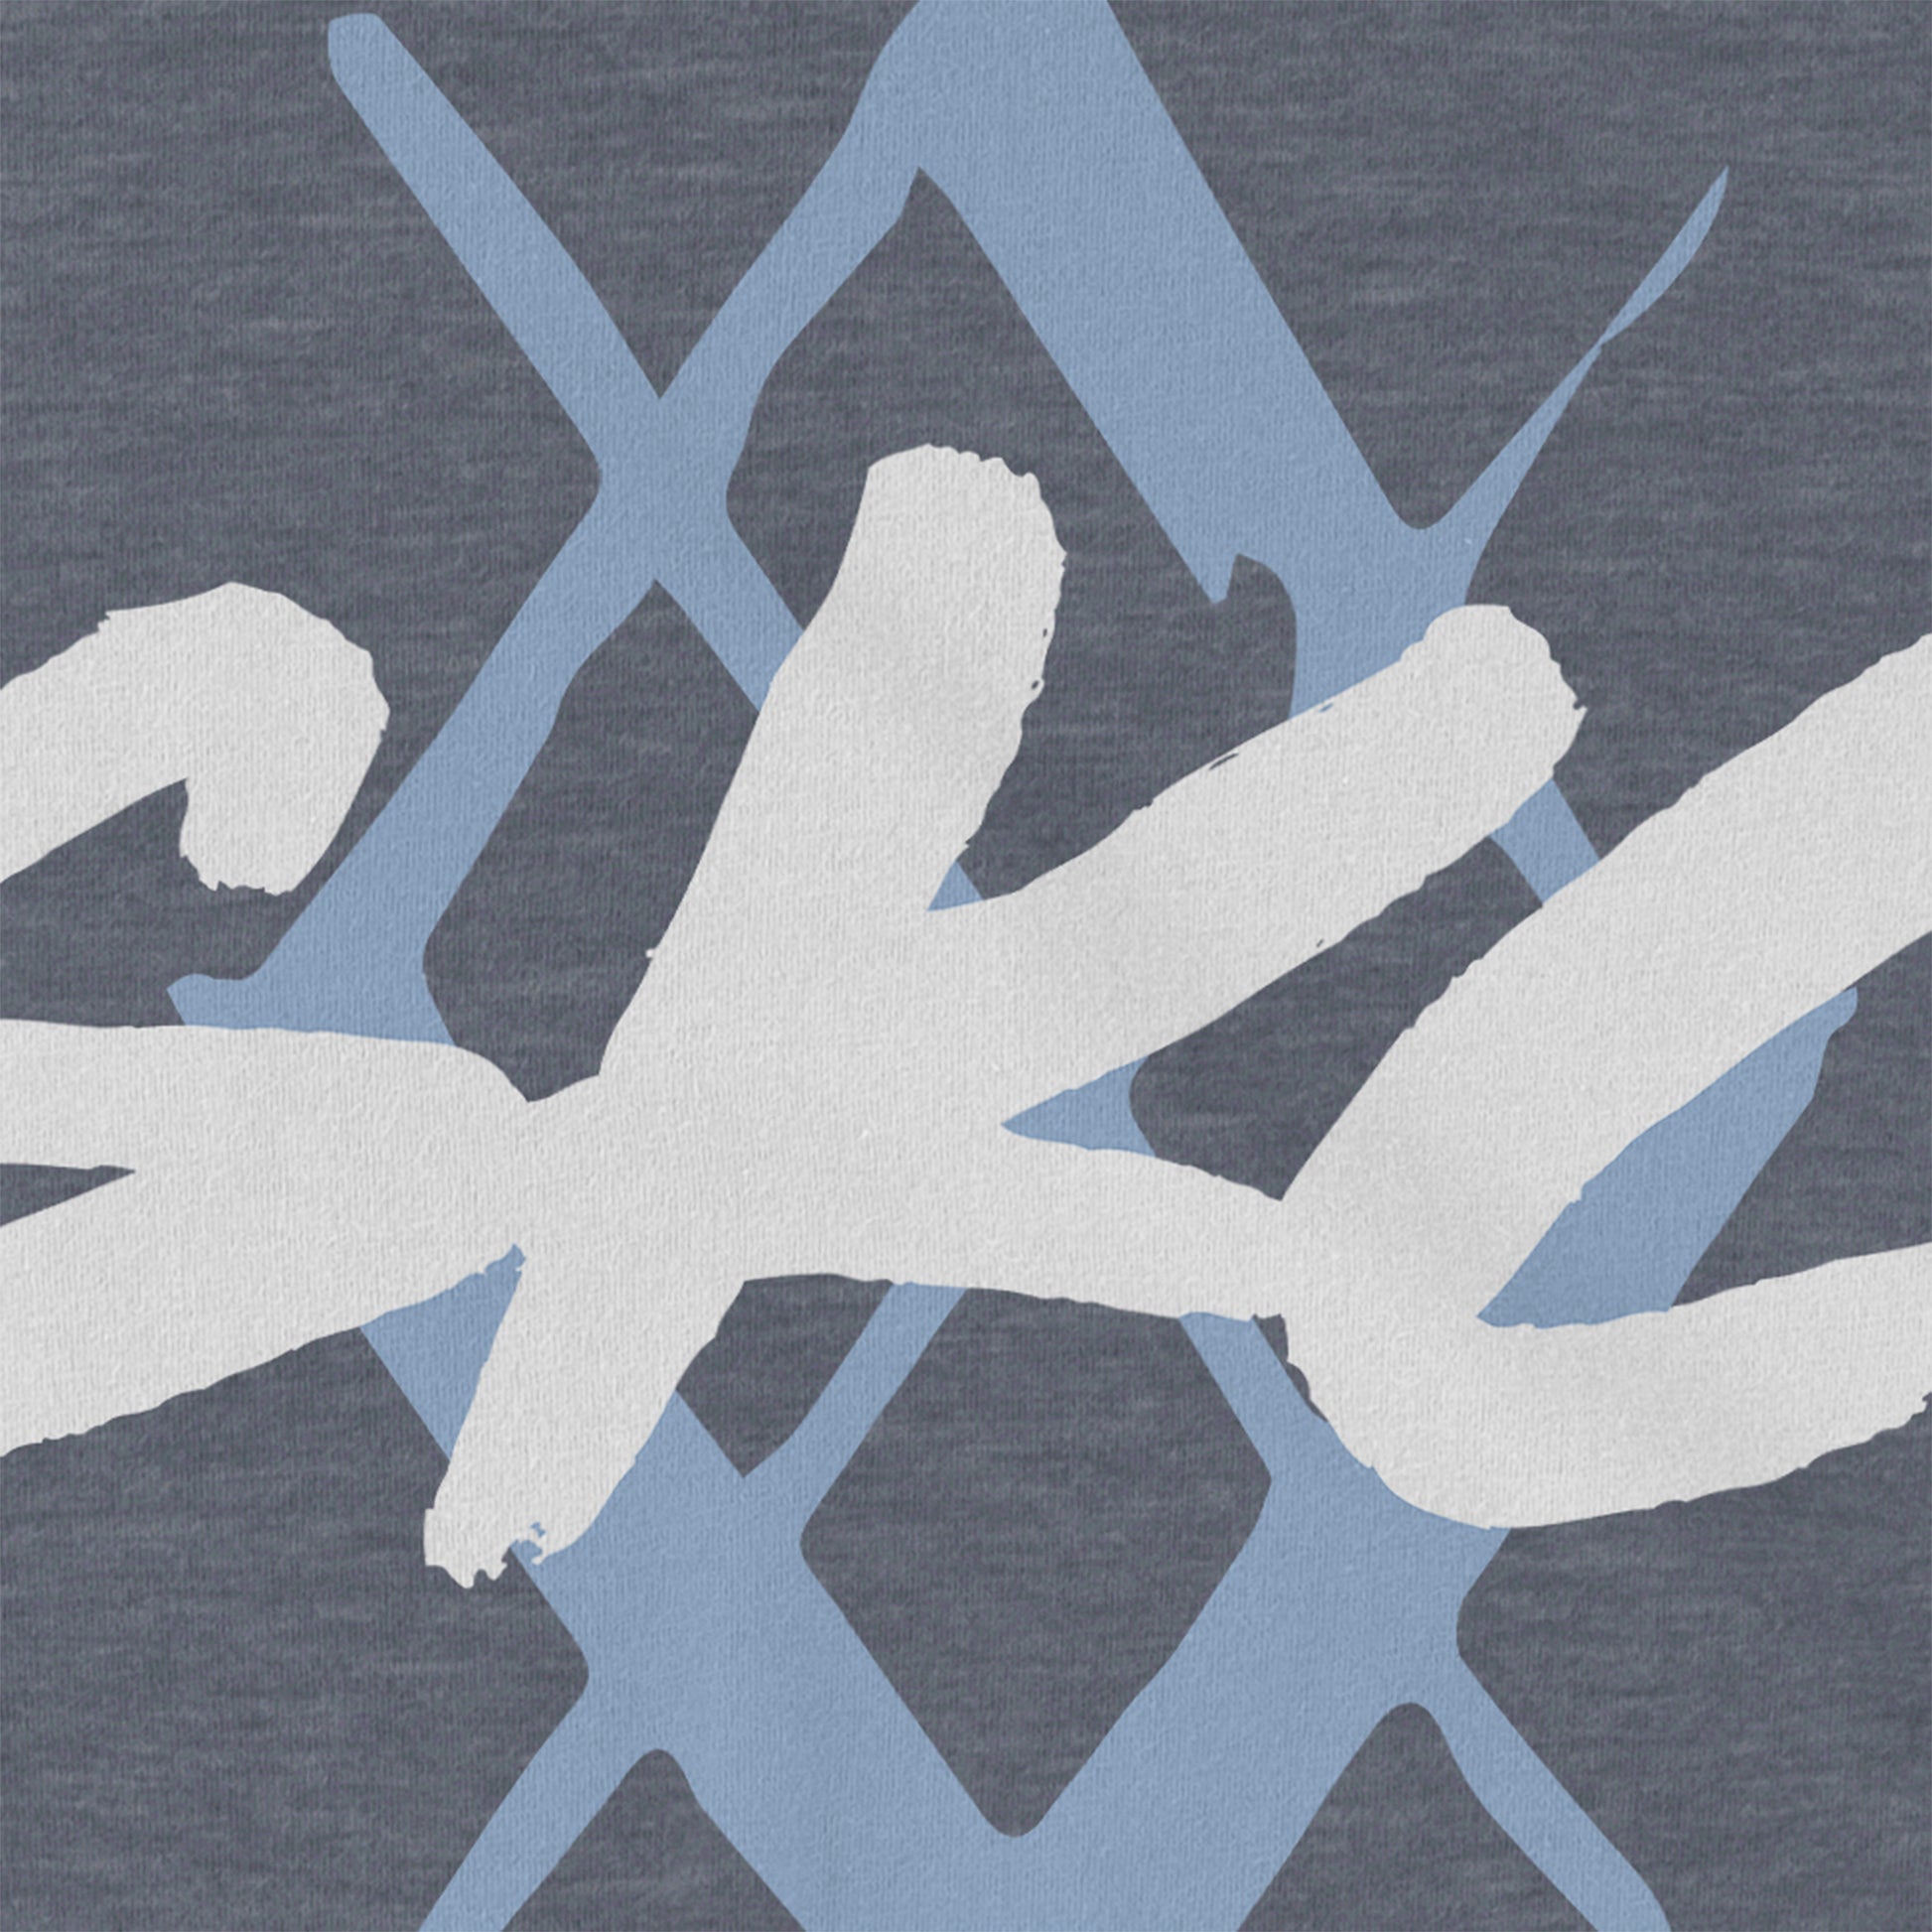 KC Swag Sporting Kansas City PAINTED SKC DIAMOND on heather slate unisex t-shirt closeup details of printed graphics